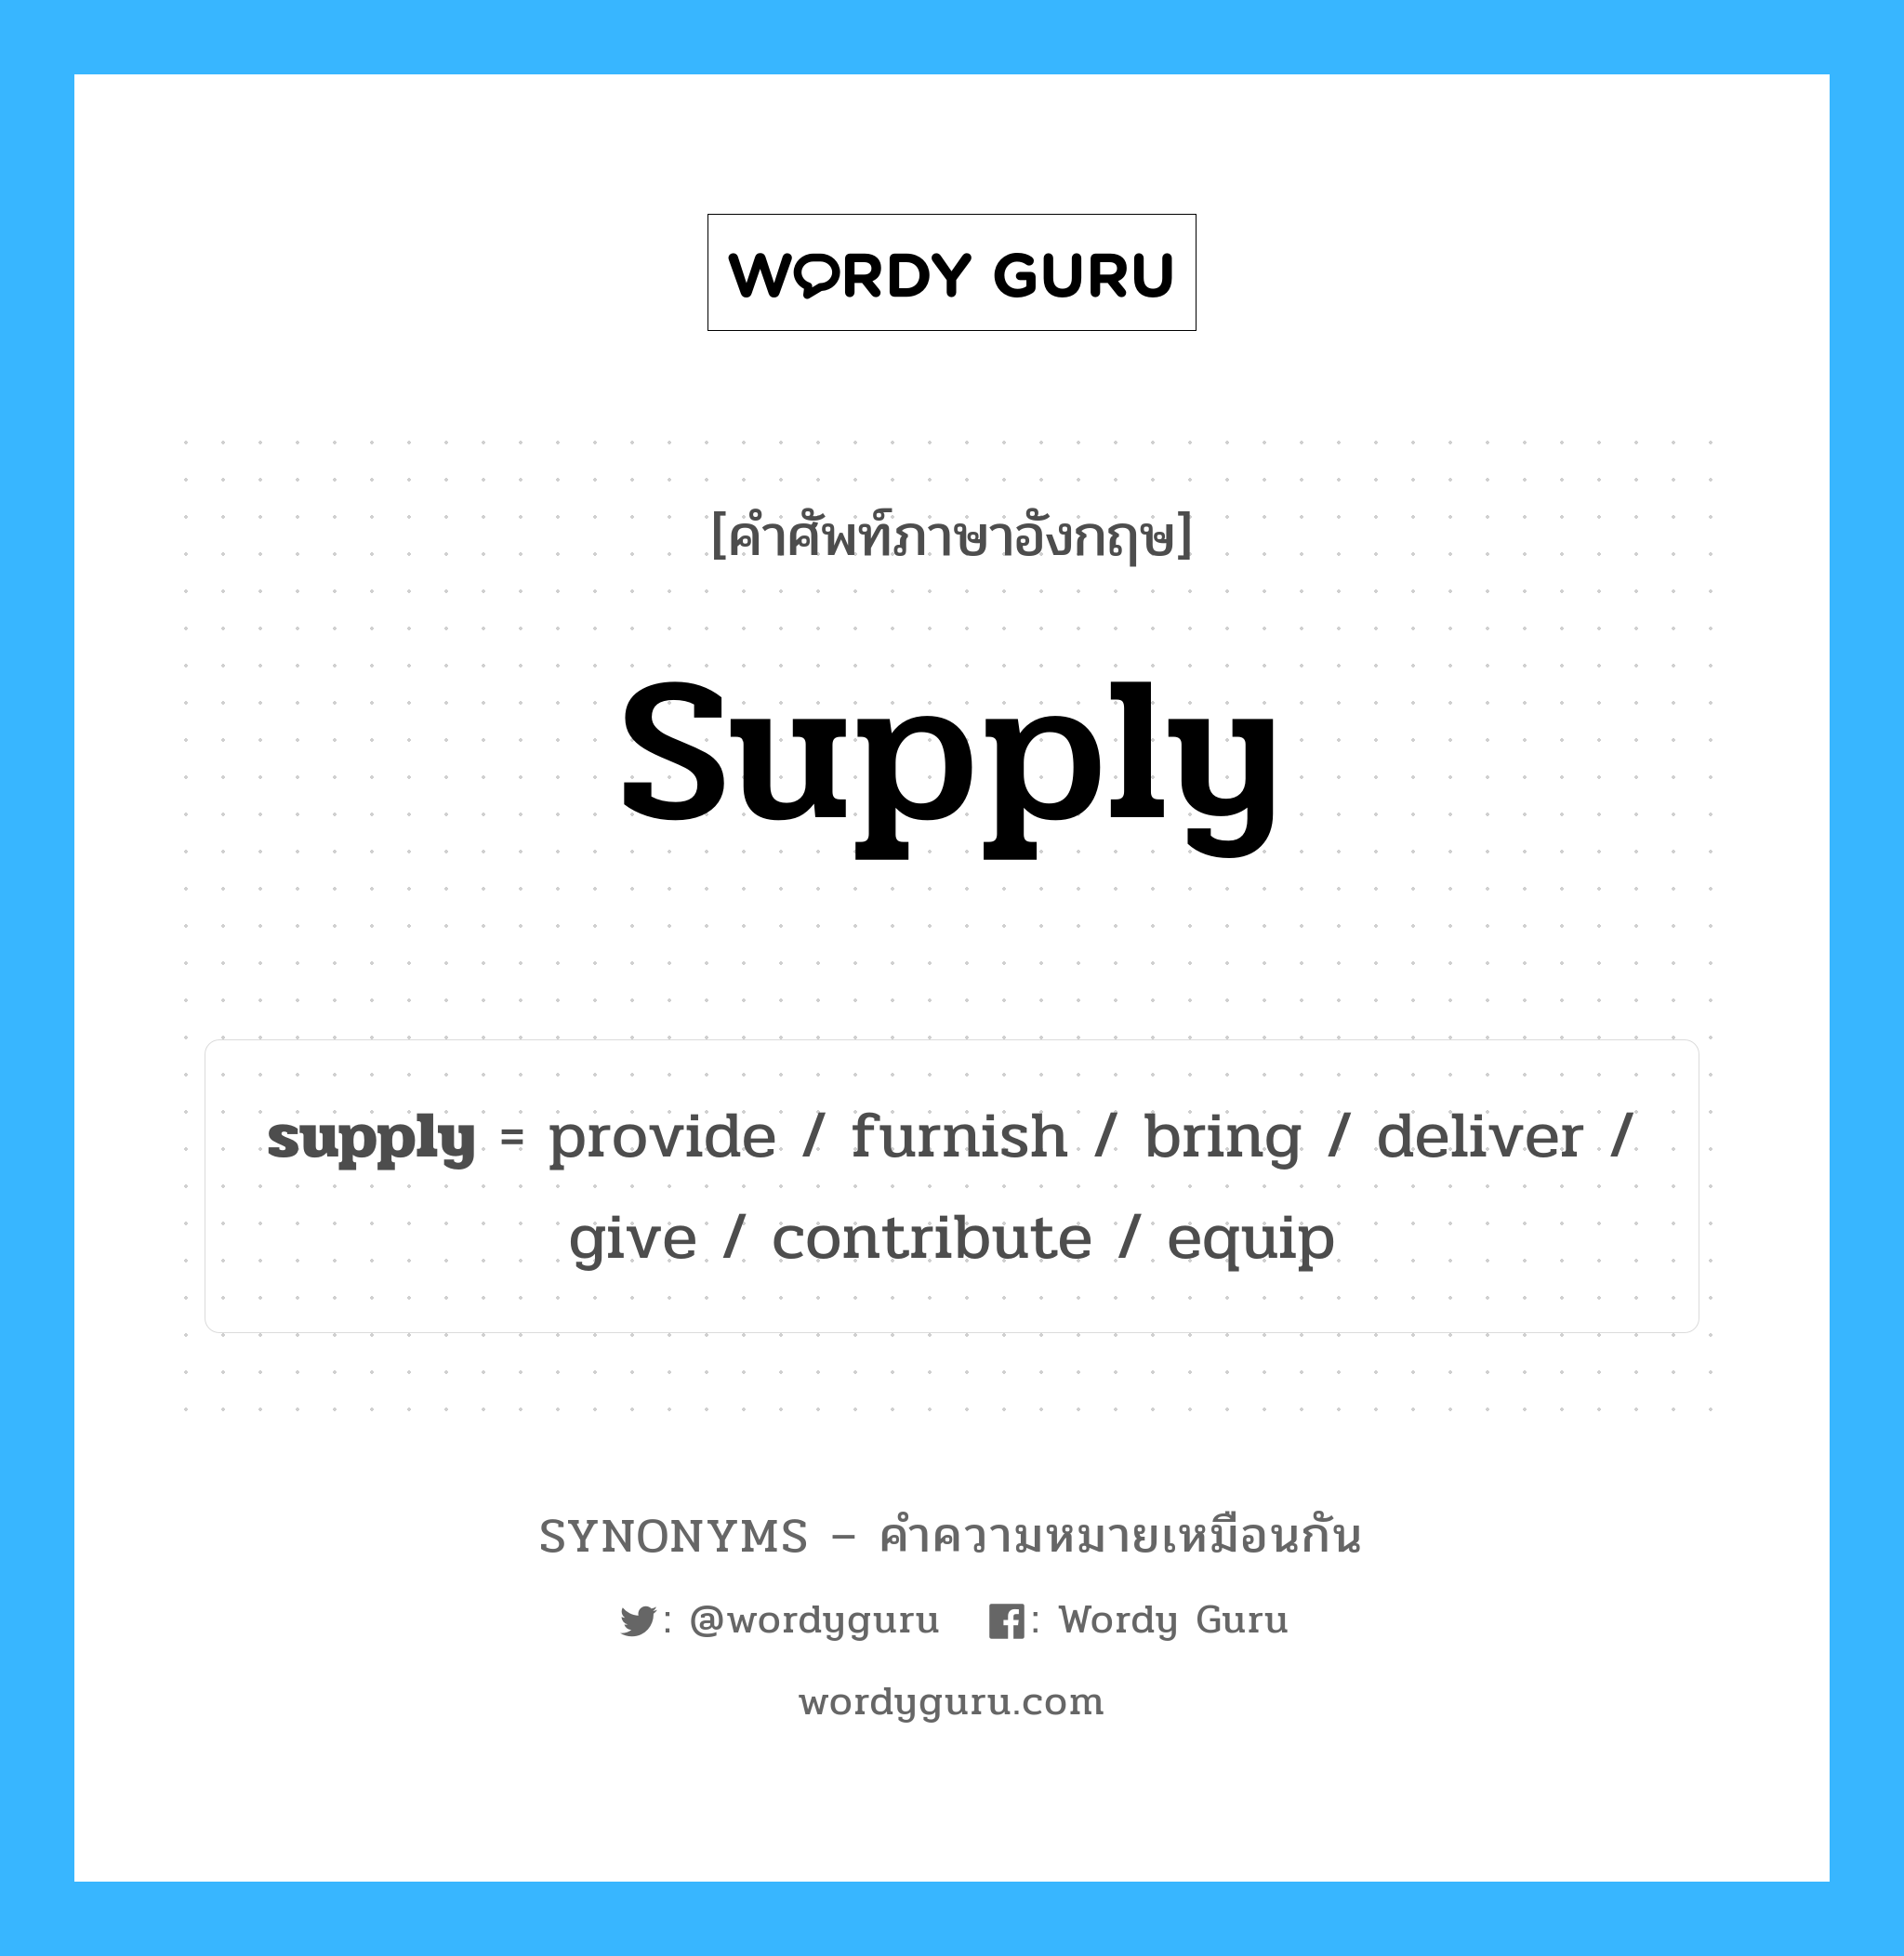 furnish เป็นหนึ่งใน supply และมีคำอื่น ๆ อีกดังนี้, คำศัพท์ภาษาอังกฤษ furnish ความหมายคล้ายกันกับ supply แปลว่า เฟอร์ หมวด supply